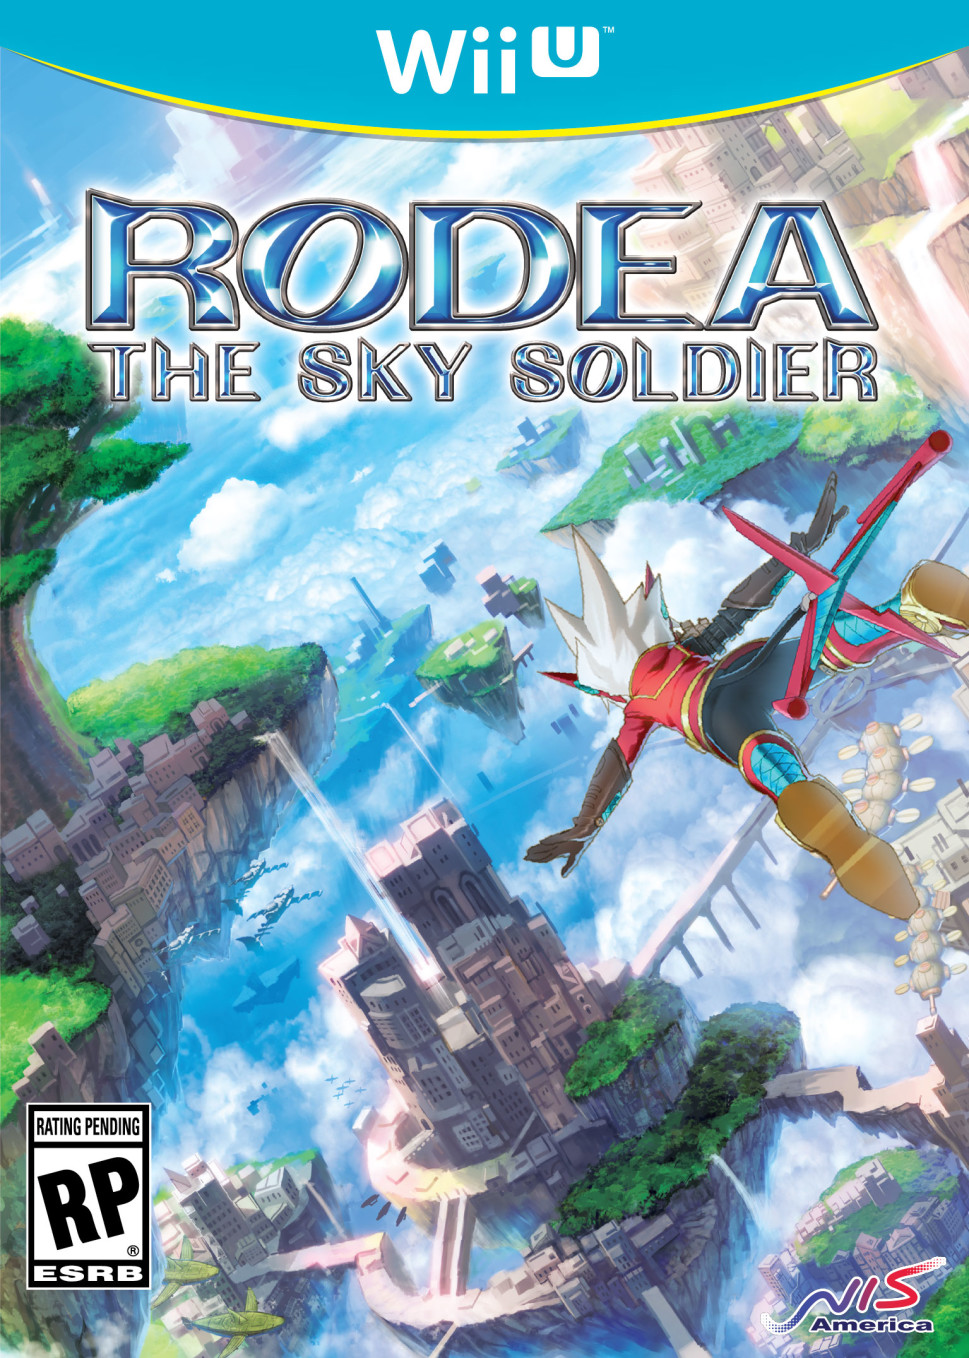 wiiu-rodea-the-sky-soldier-box-artwork-usa-2015